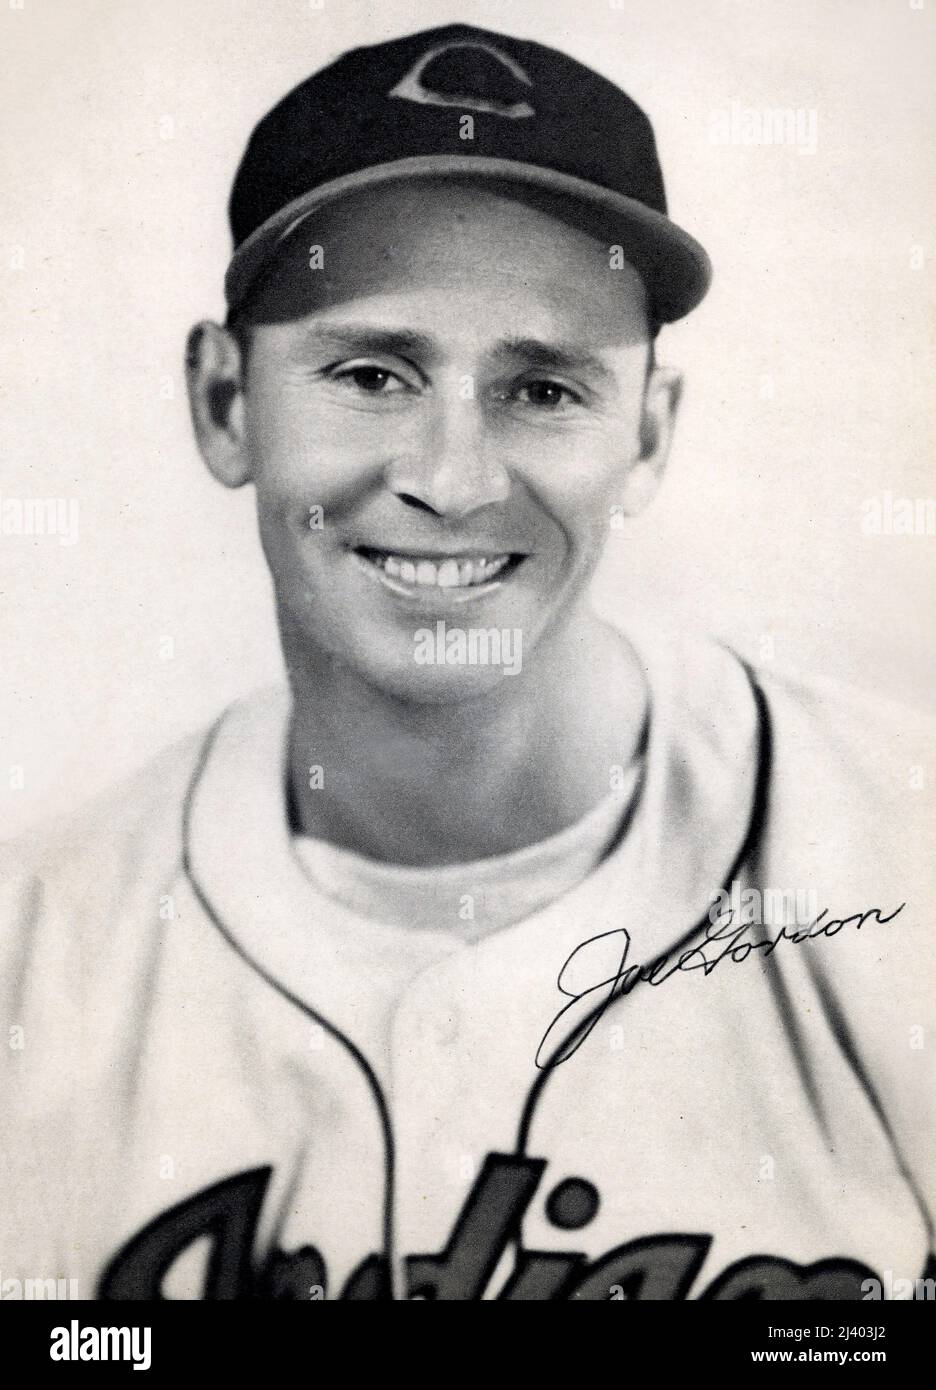 Souvenir black and white photo of Cleveland Indians player Joe Gordon, circa 1940s. Stock Photo